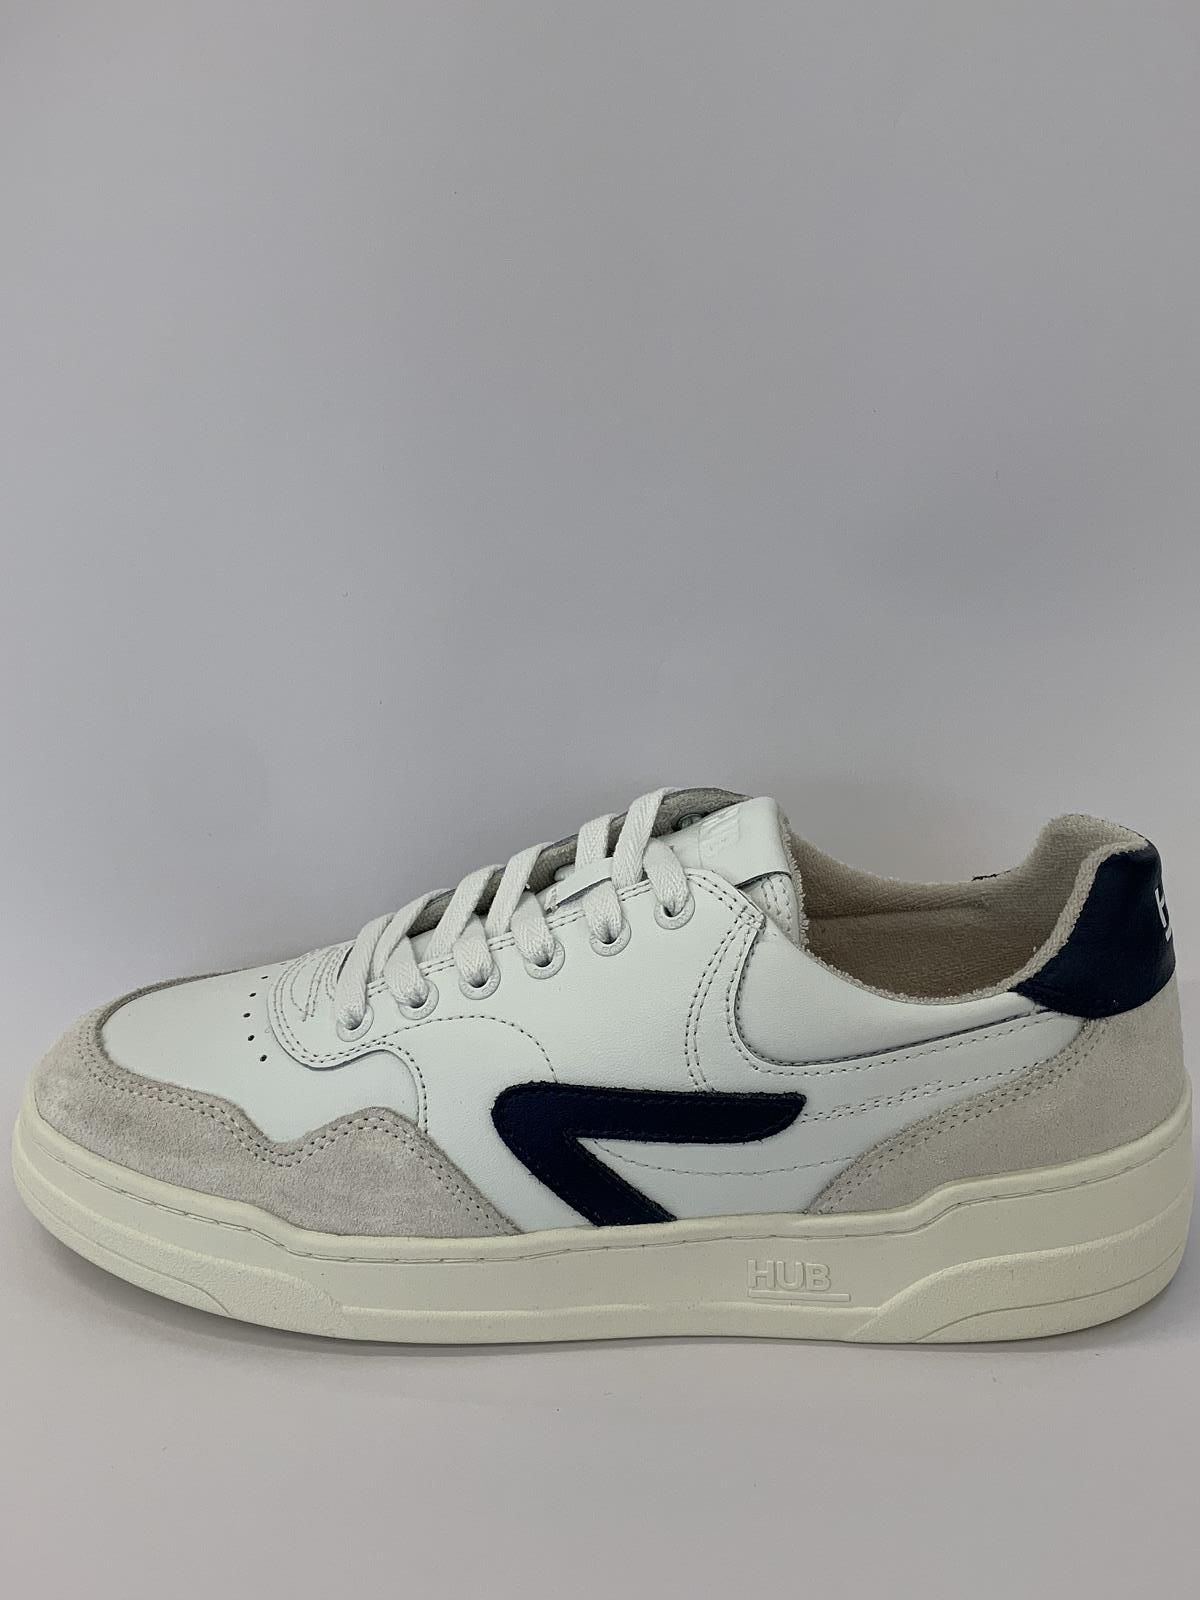 HUB Sneaker Wit+kleur heren (Sneaker Hub Blauw - Court-Z) - Schoenen Luca